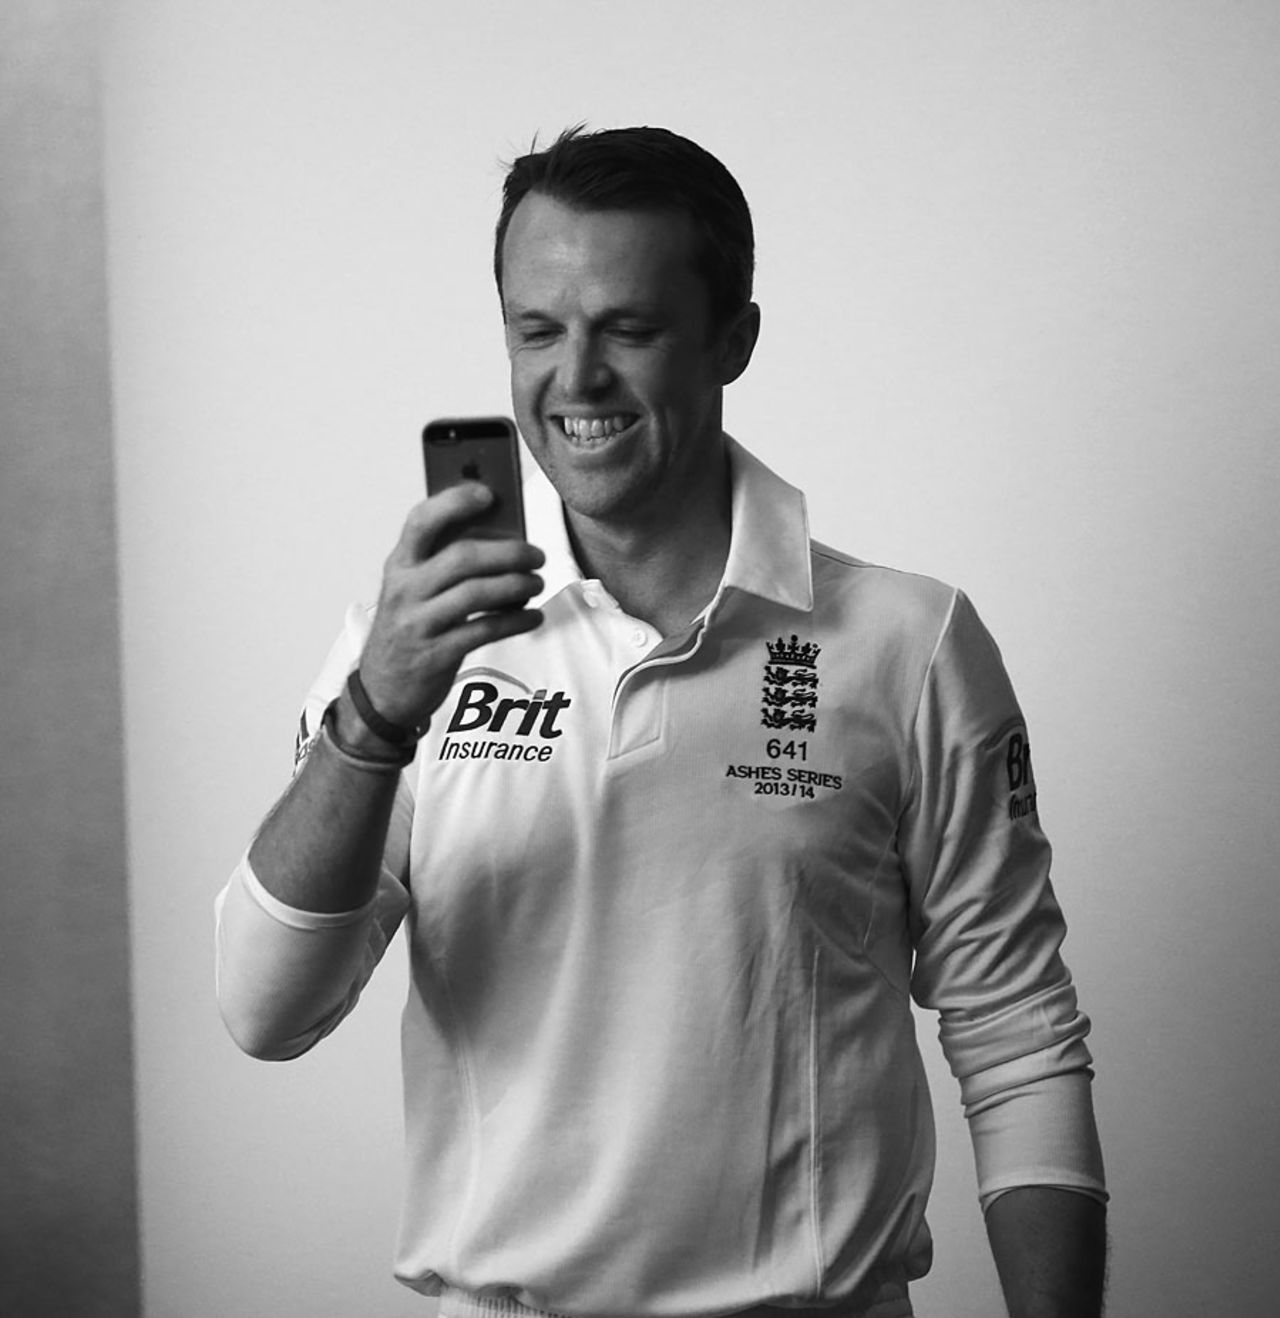 Graeme Swann films England's photo shoot on his phone, Sydney, November 11, 2013